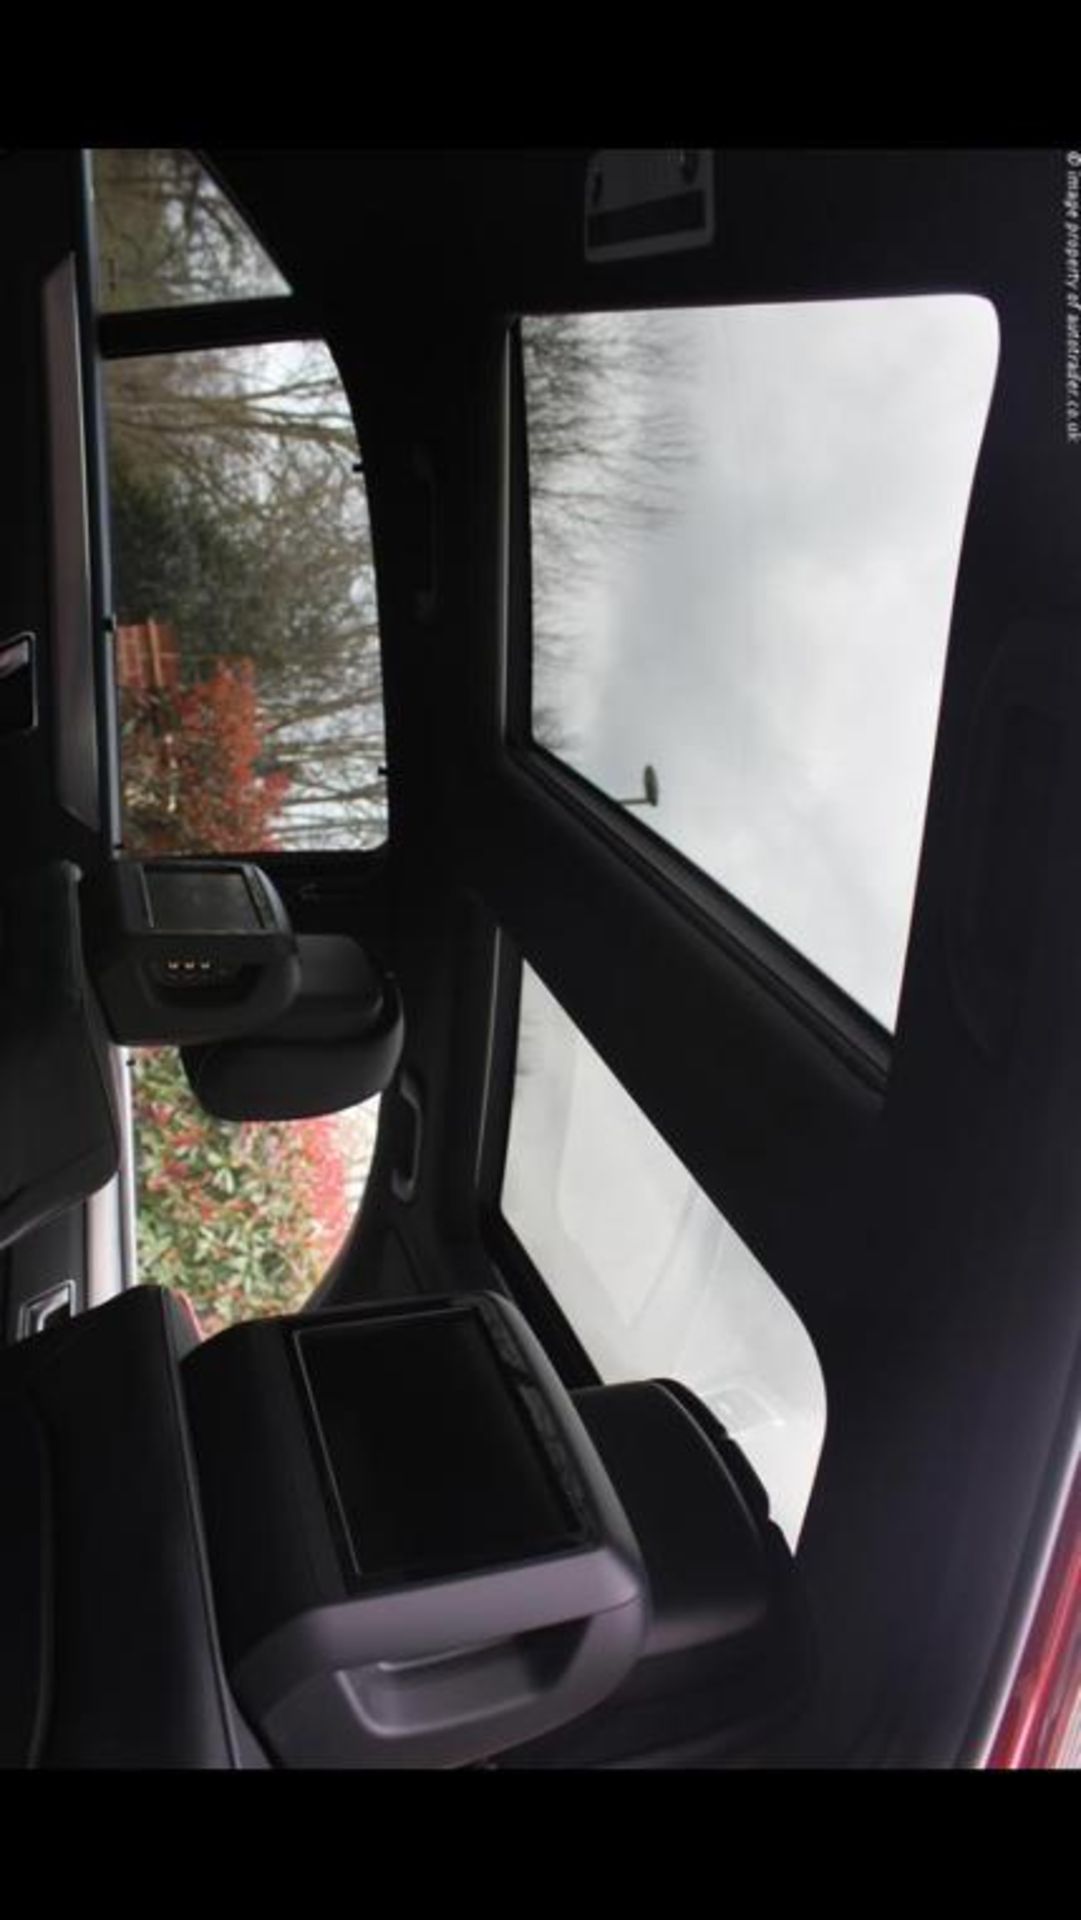 2014/63 REG MERCEDES-BENZ E300 AMG SPORT BLUETEC HYBRID 2.2 ELECTRIC DIESEL RED 4 DOOR SALOON - Image 12 of 15